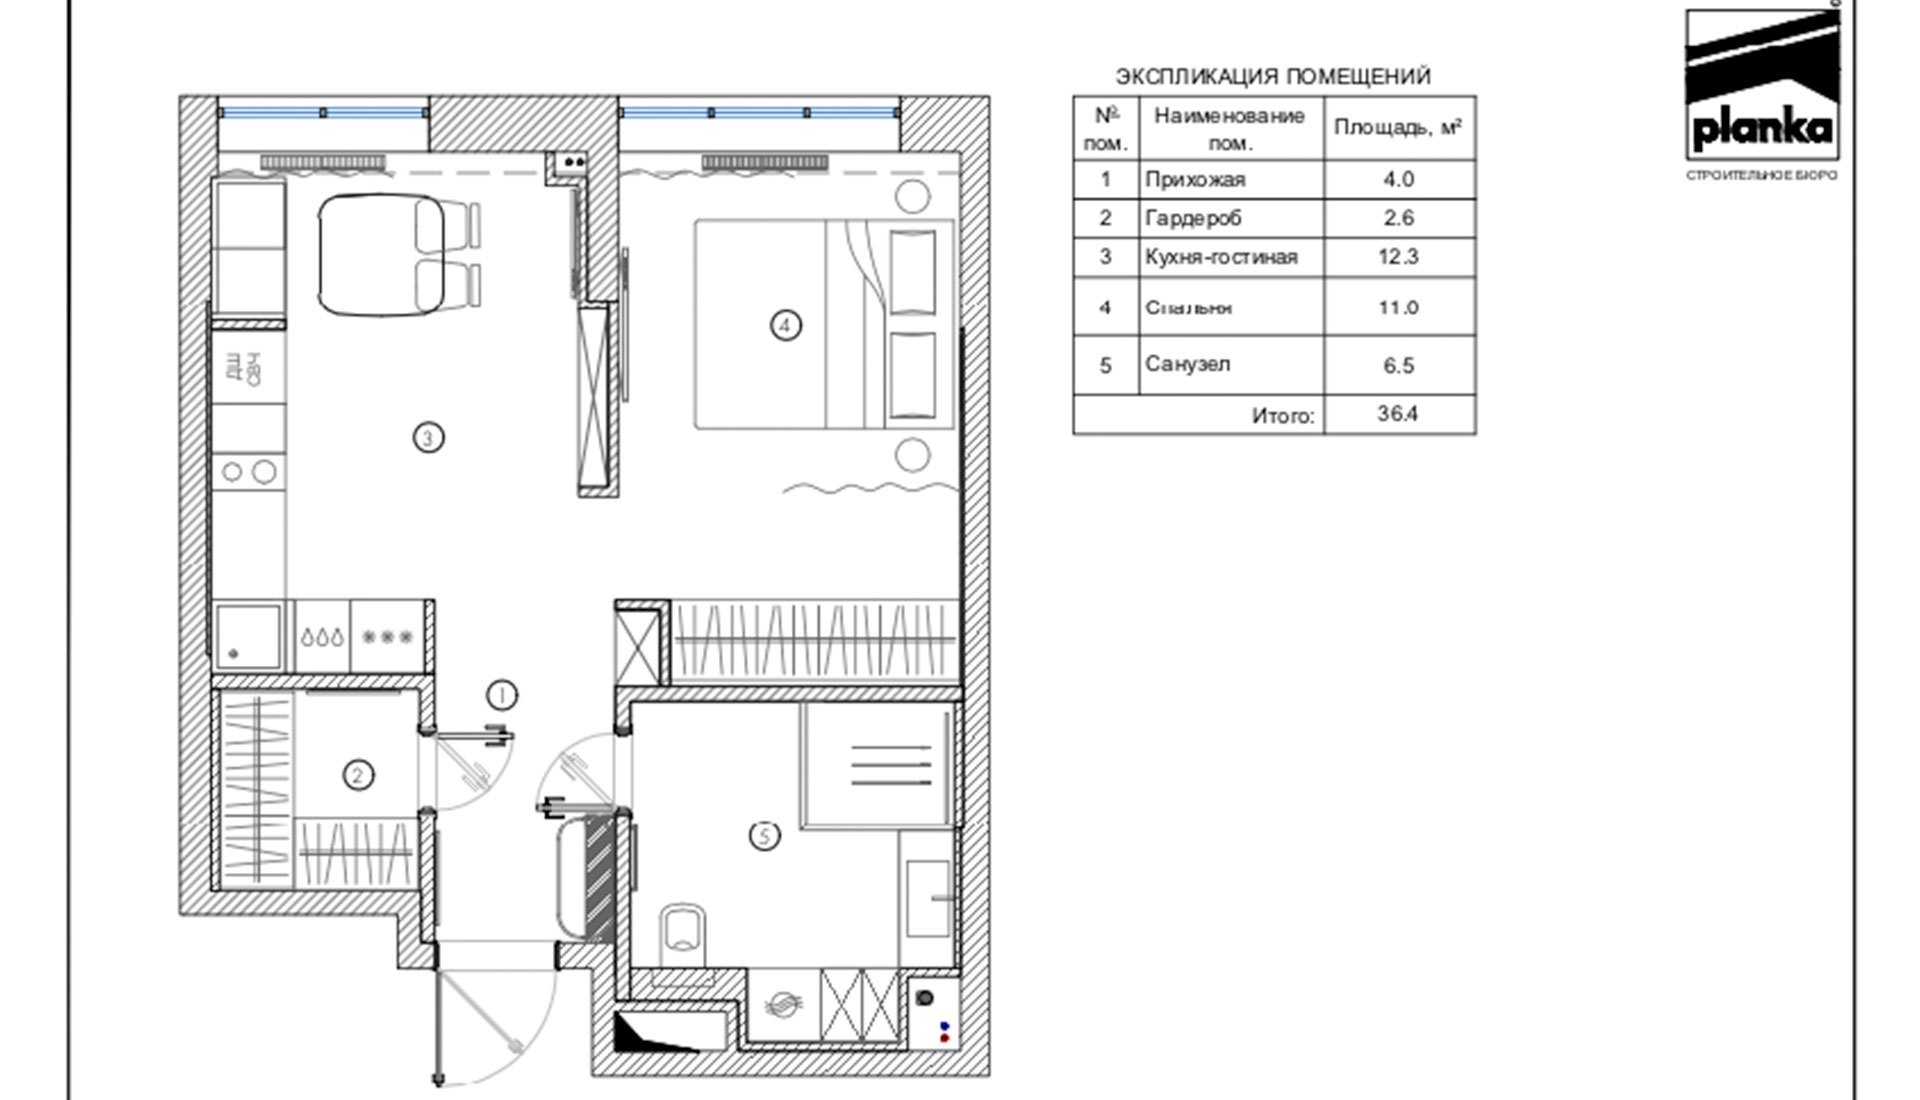 Planka,公寓設計,小戶型設計案例,小公寓設計,單身公寓,原木色+白色,莫斯科,36㎡